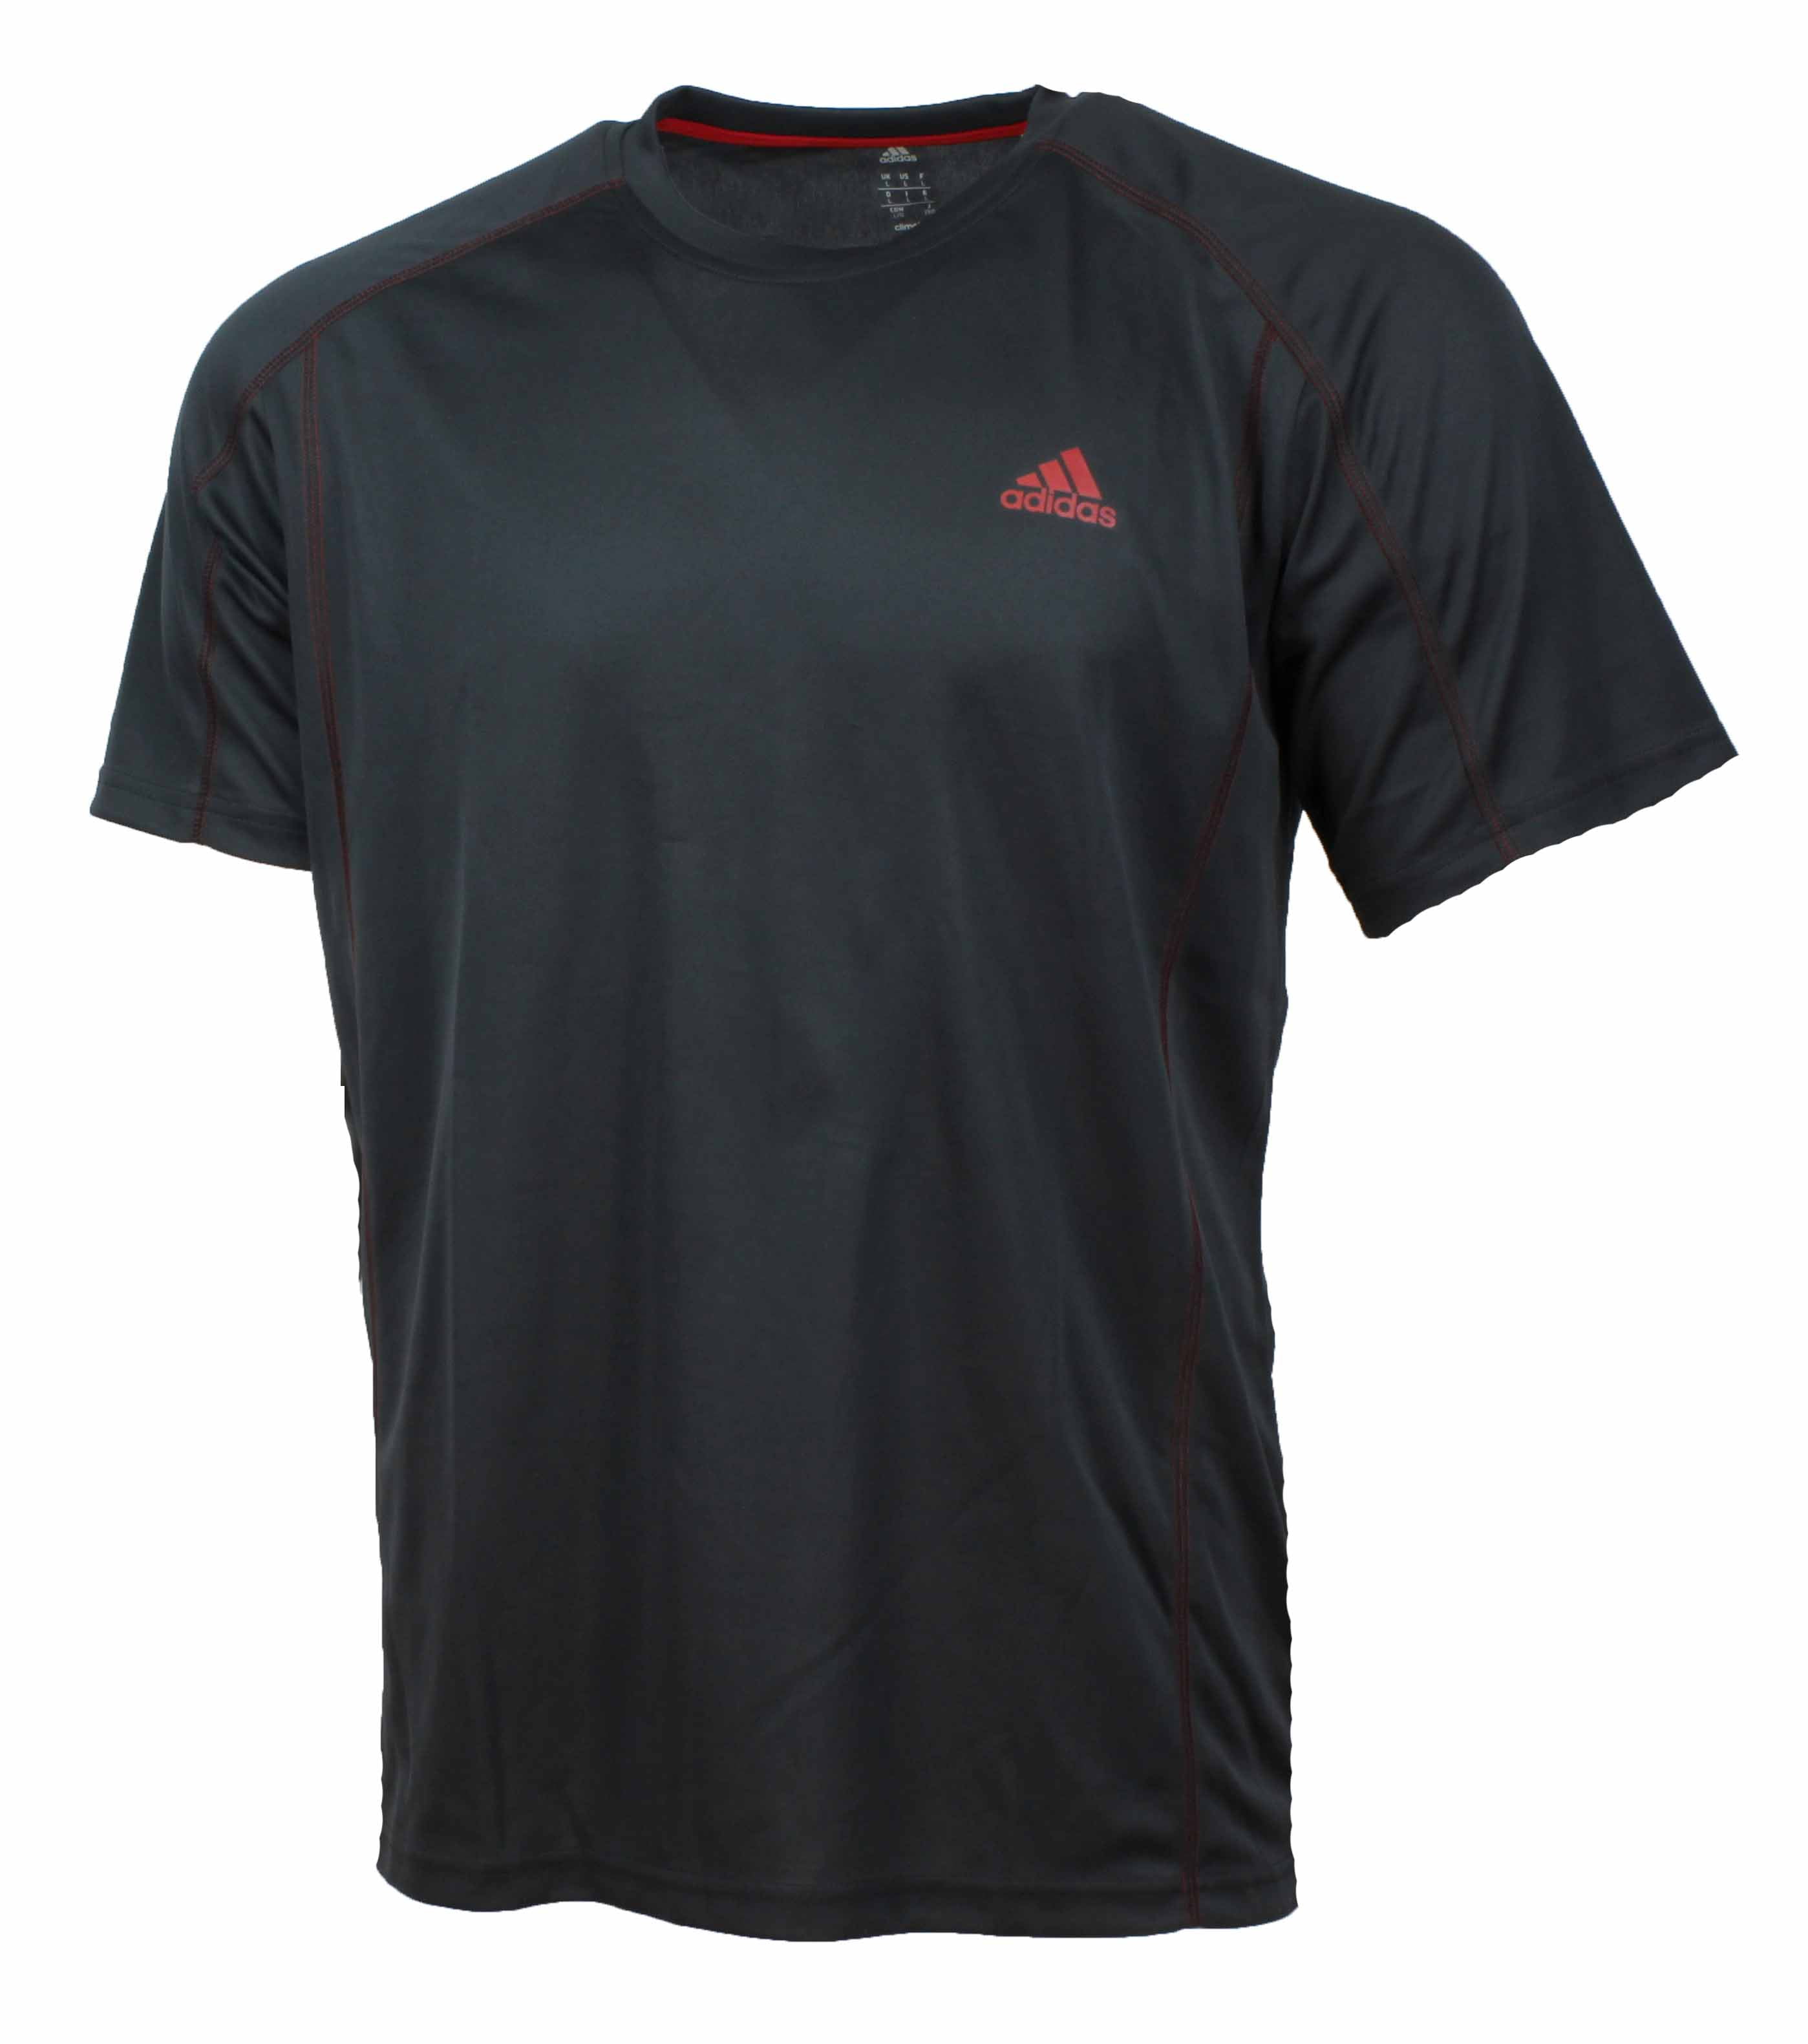 Adidas Mens Short Sleeve Climalite Grey/Scarlet, 2XL) - Walmart.com